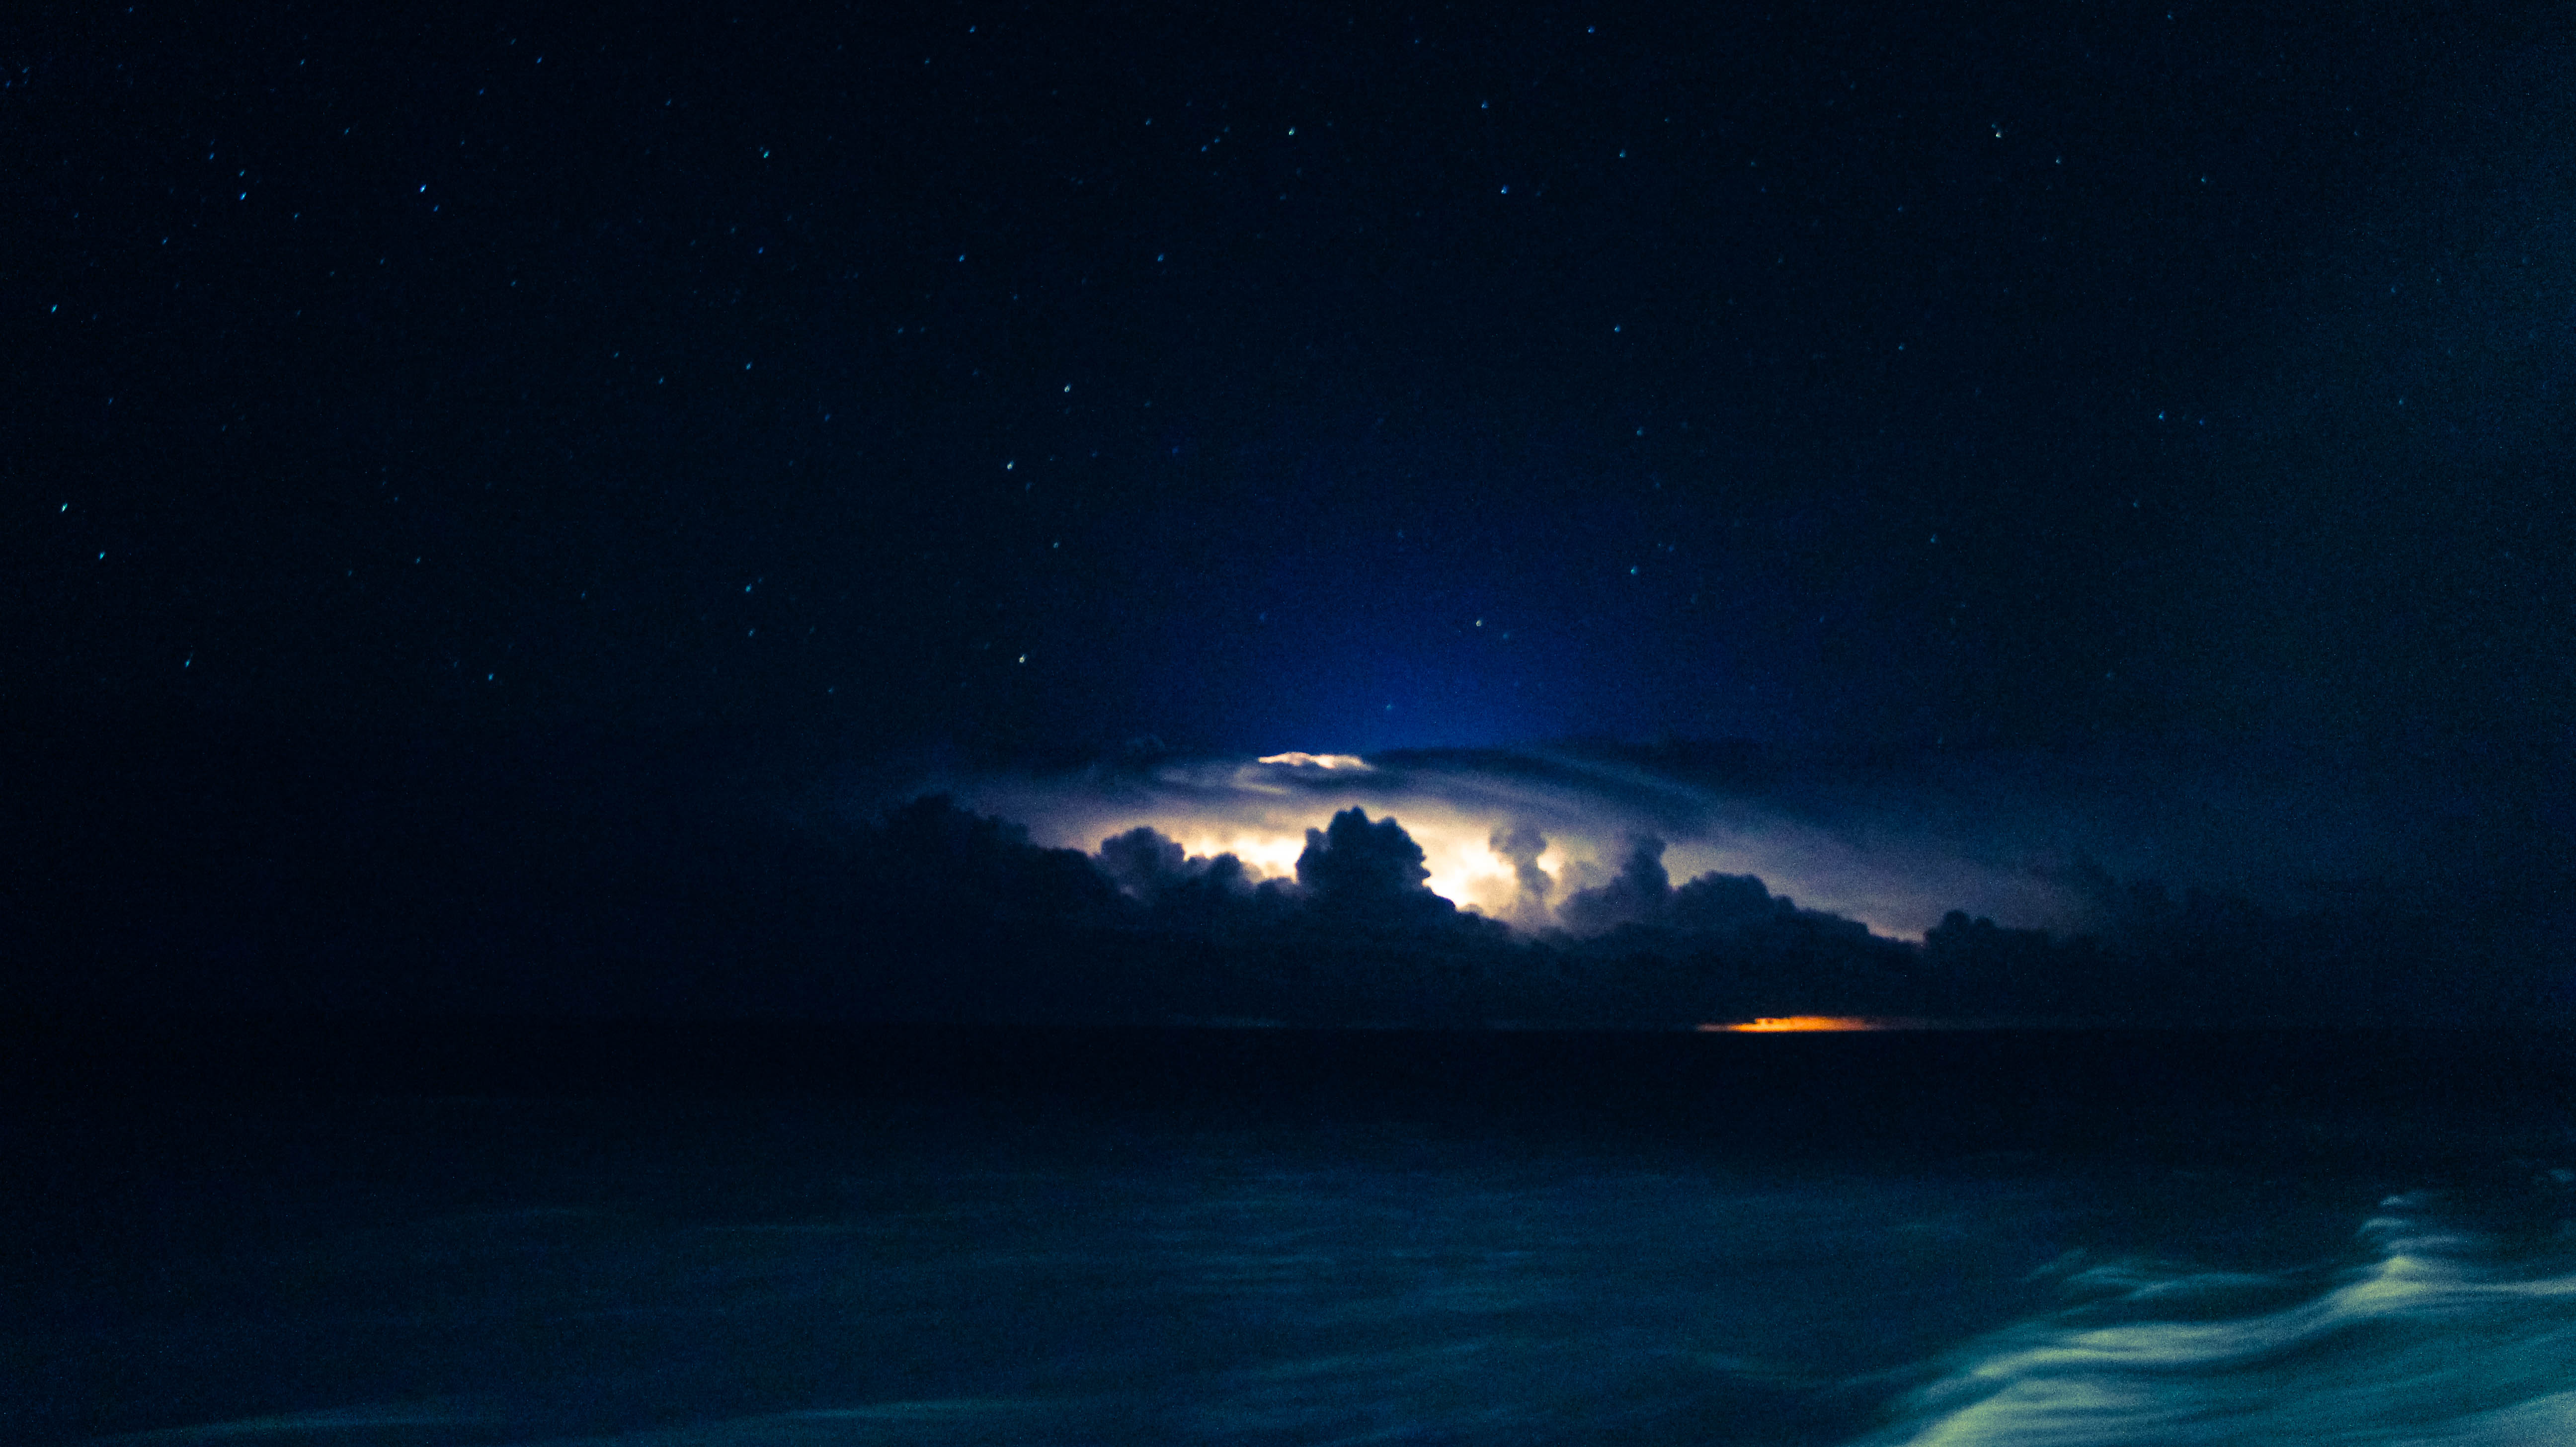 Free photo: Lightning at night - Outdoor - Free Download - Jooinn